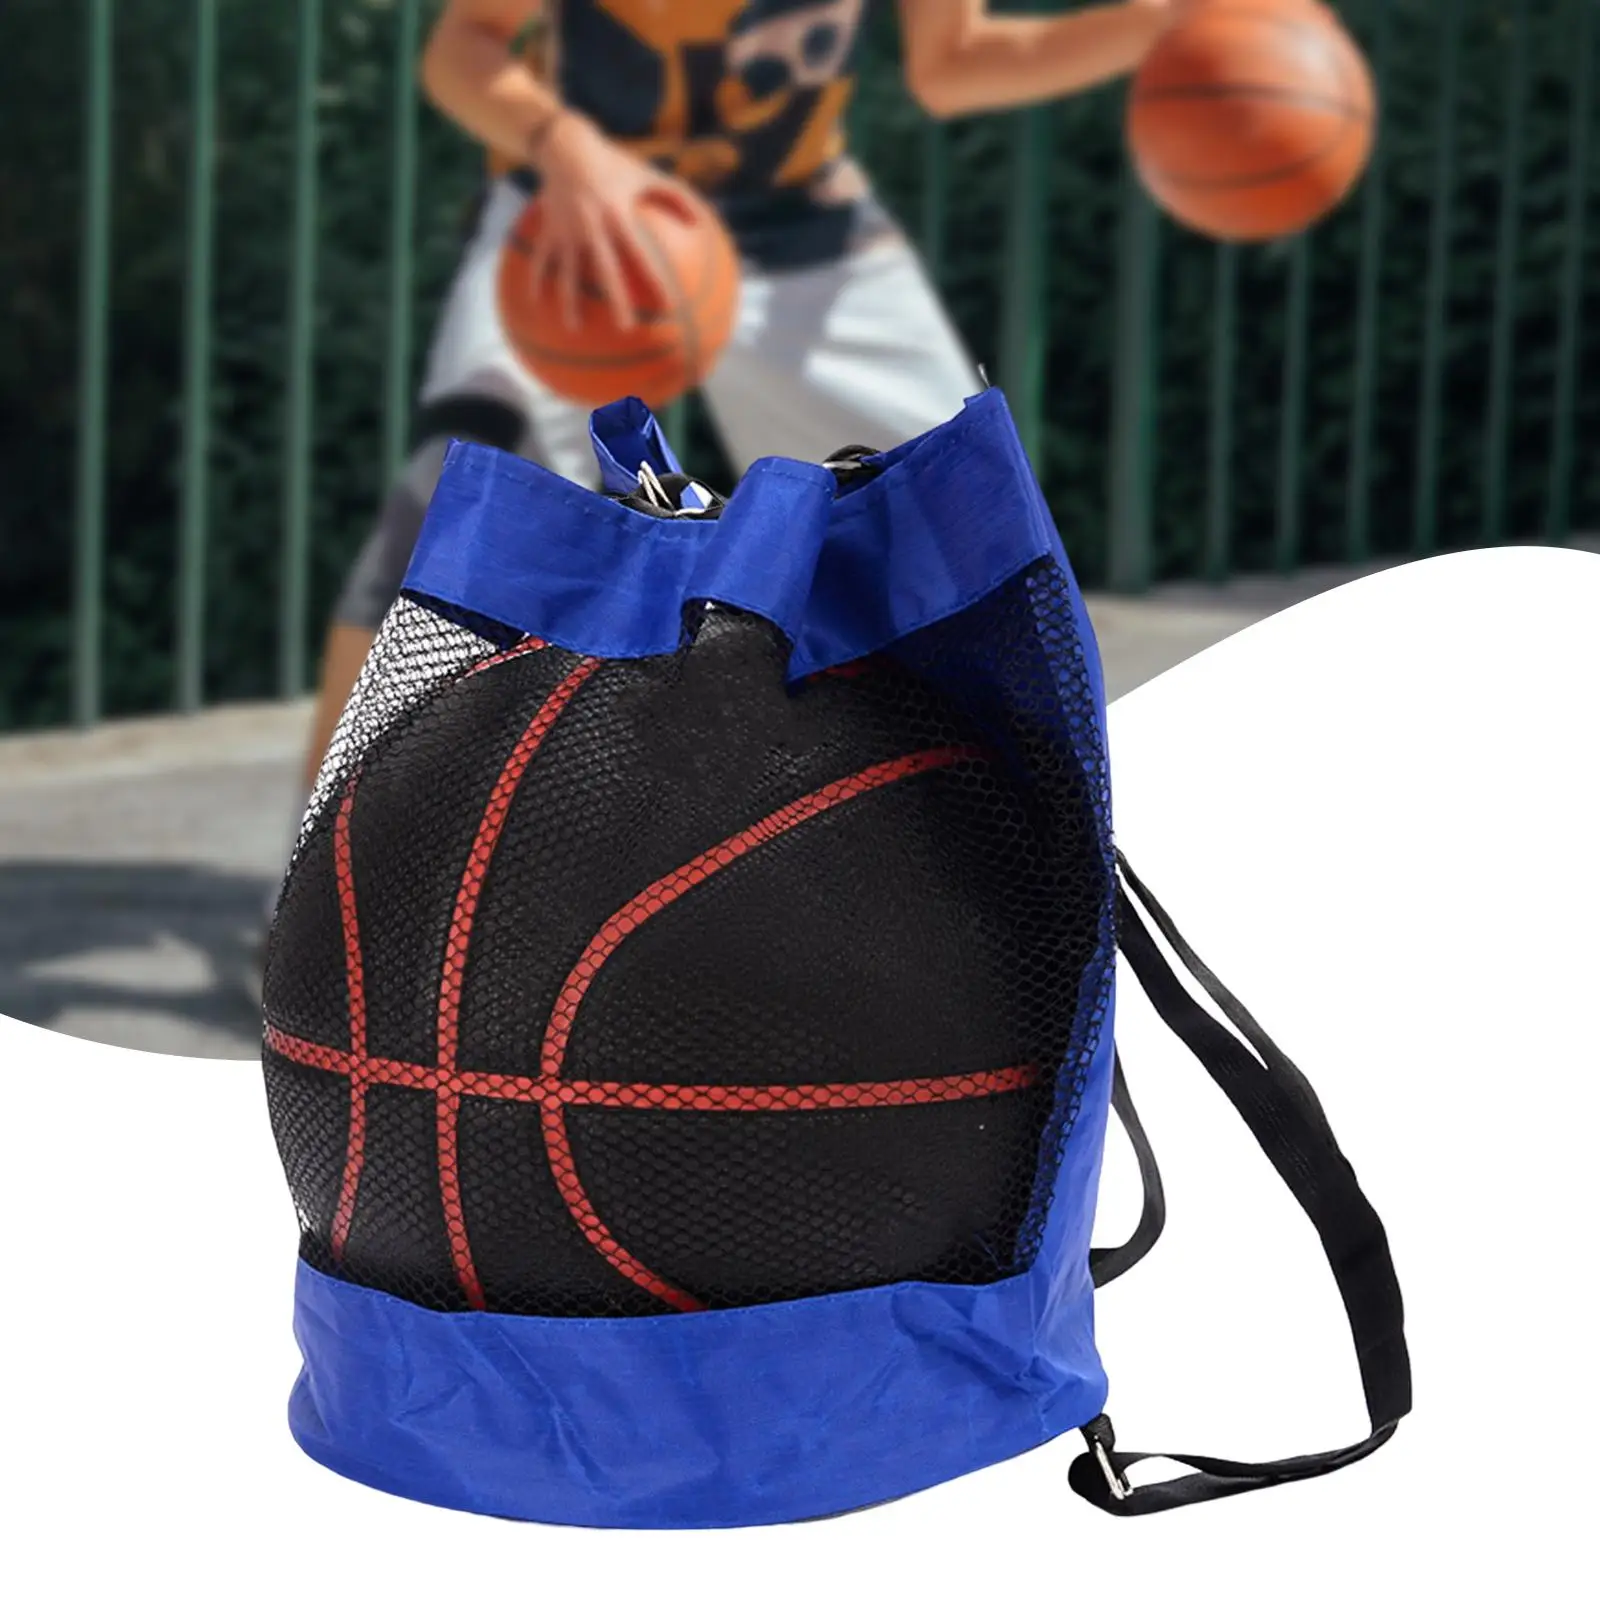 Basketball Backpack Adjustable Shoulder Straps Sackpack Ball Storage Bag for Volleyball Basketball Rugby Ball Soccer